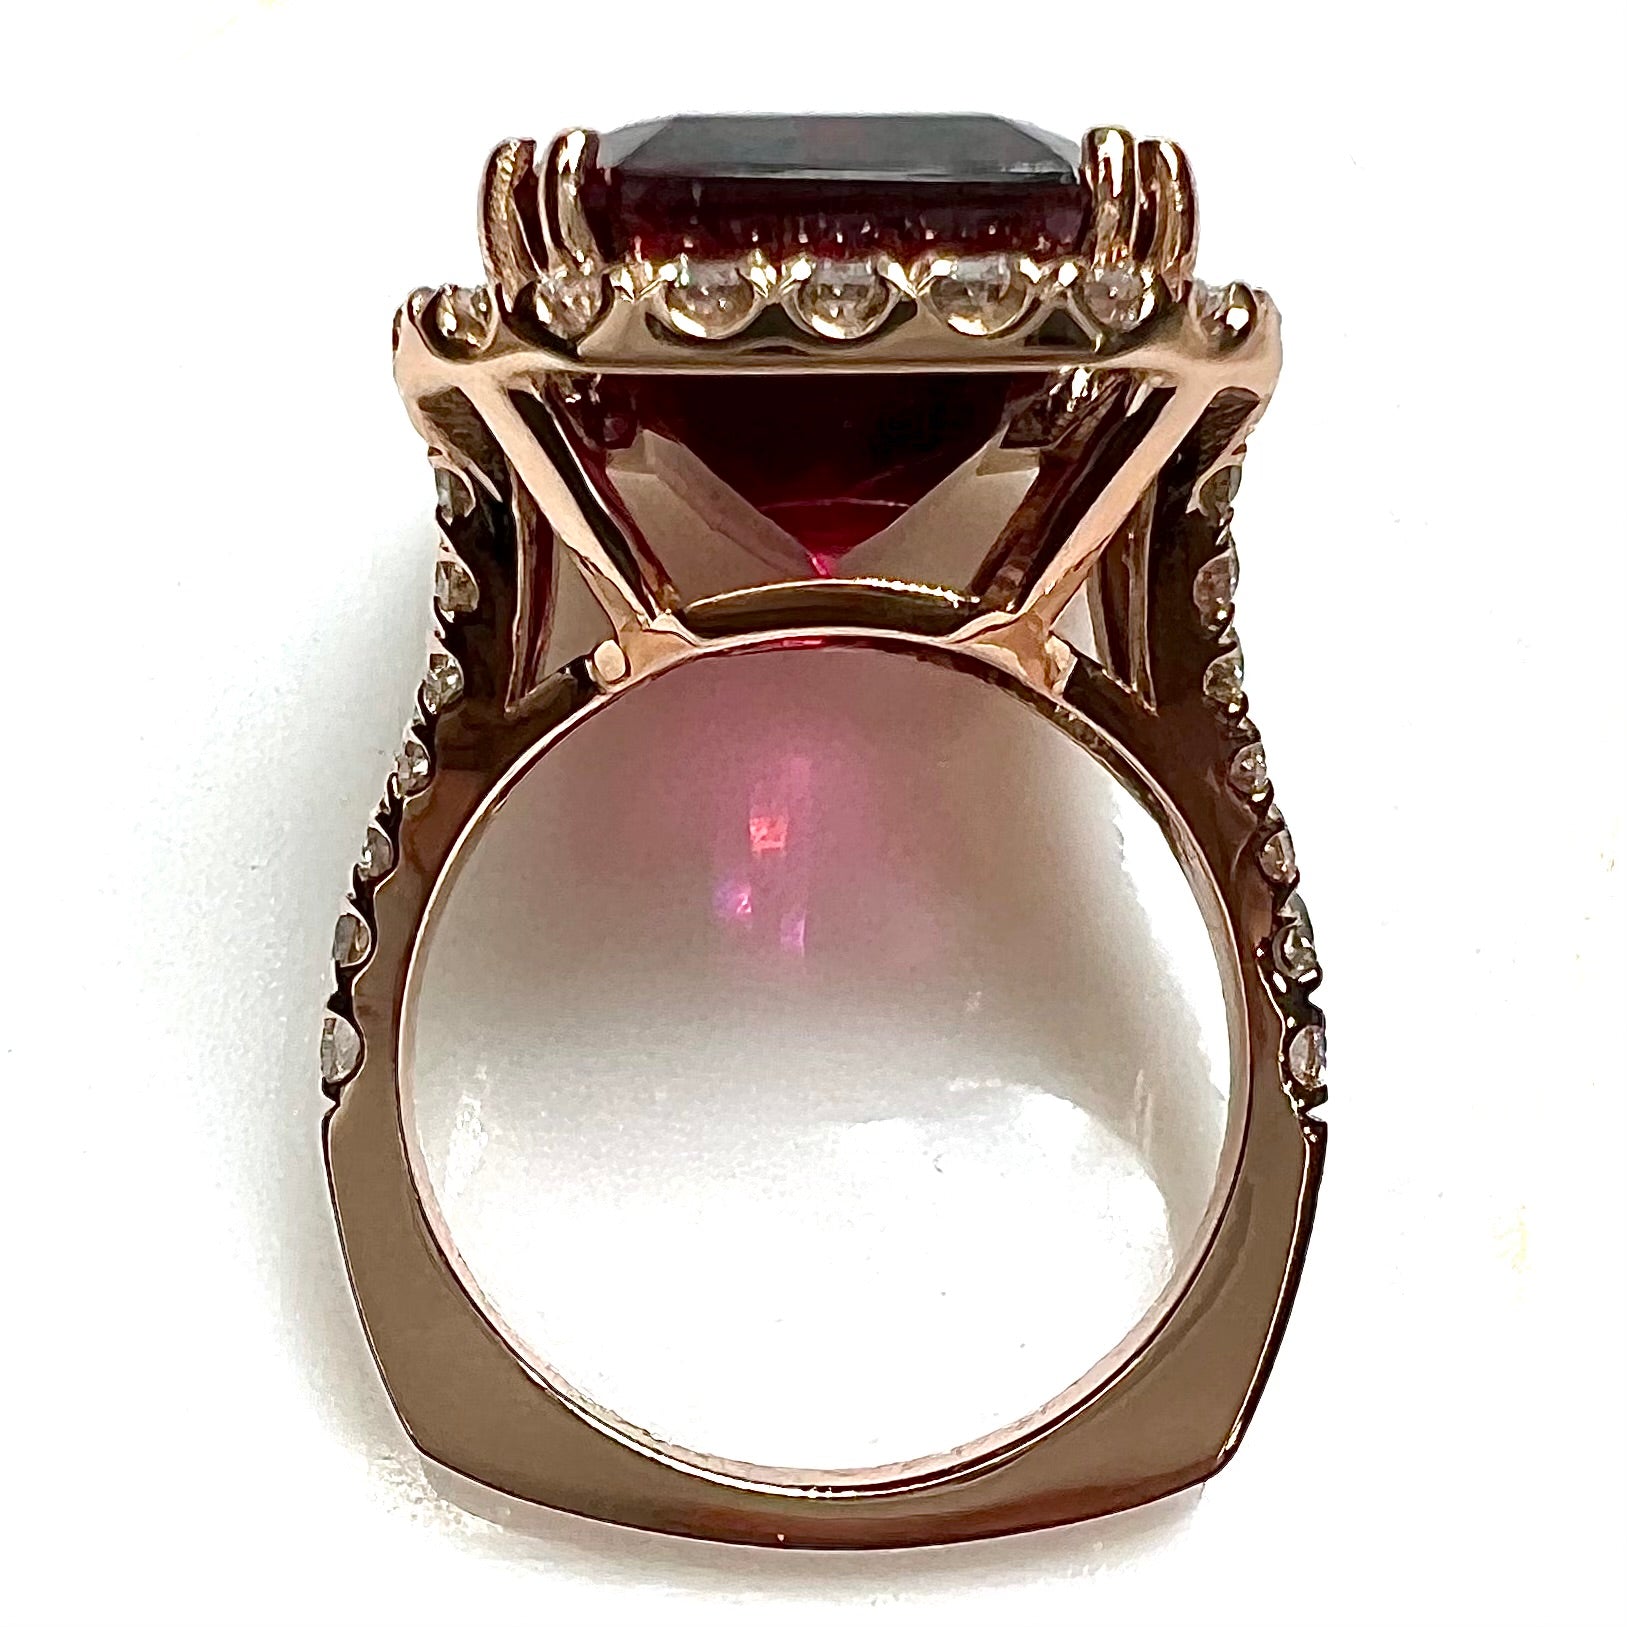 Red emerald cut rubellite tourmaline gemstone set with near flawless round cut diamonds in rose gold.